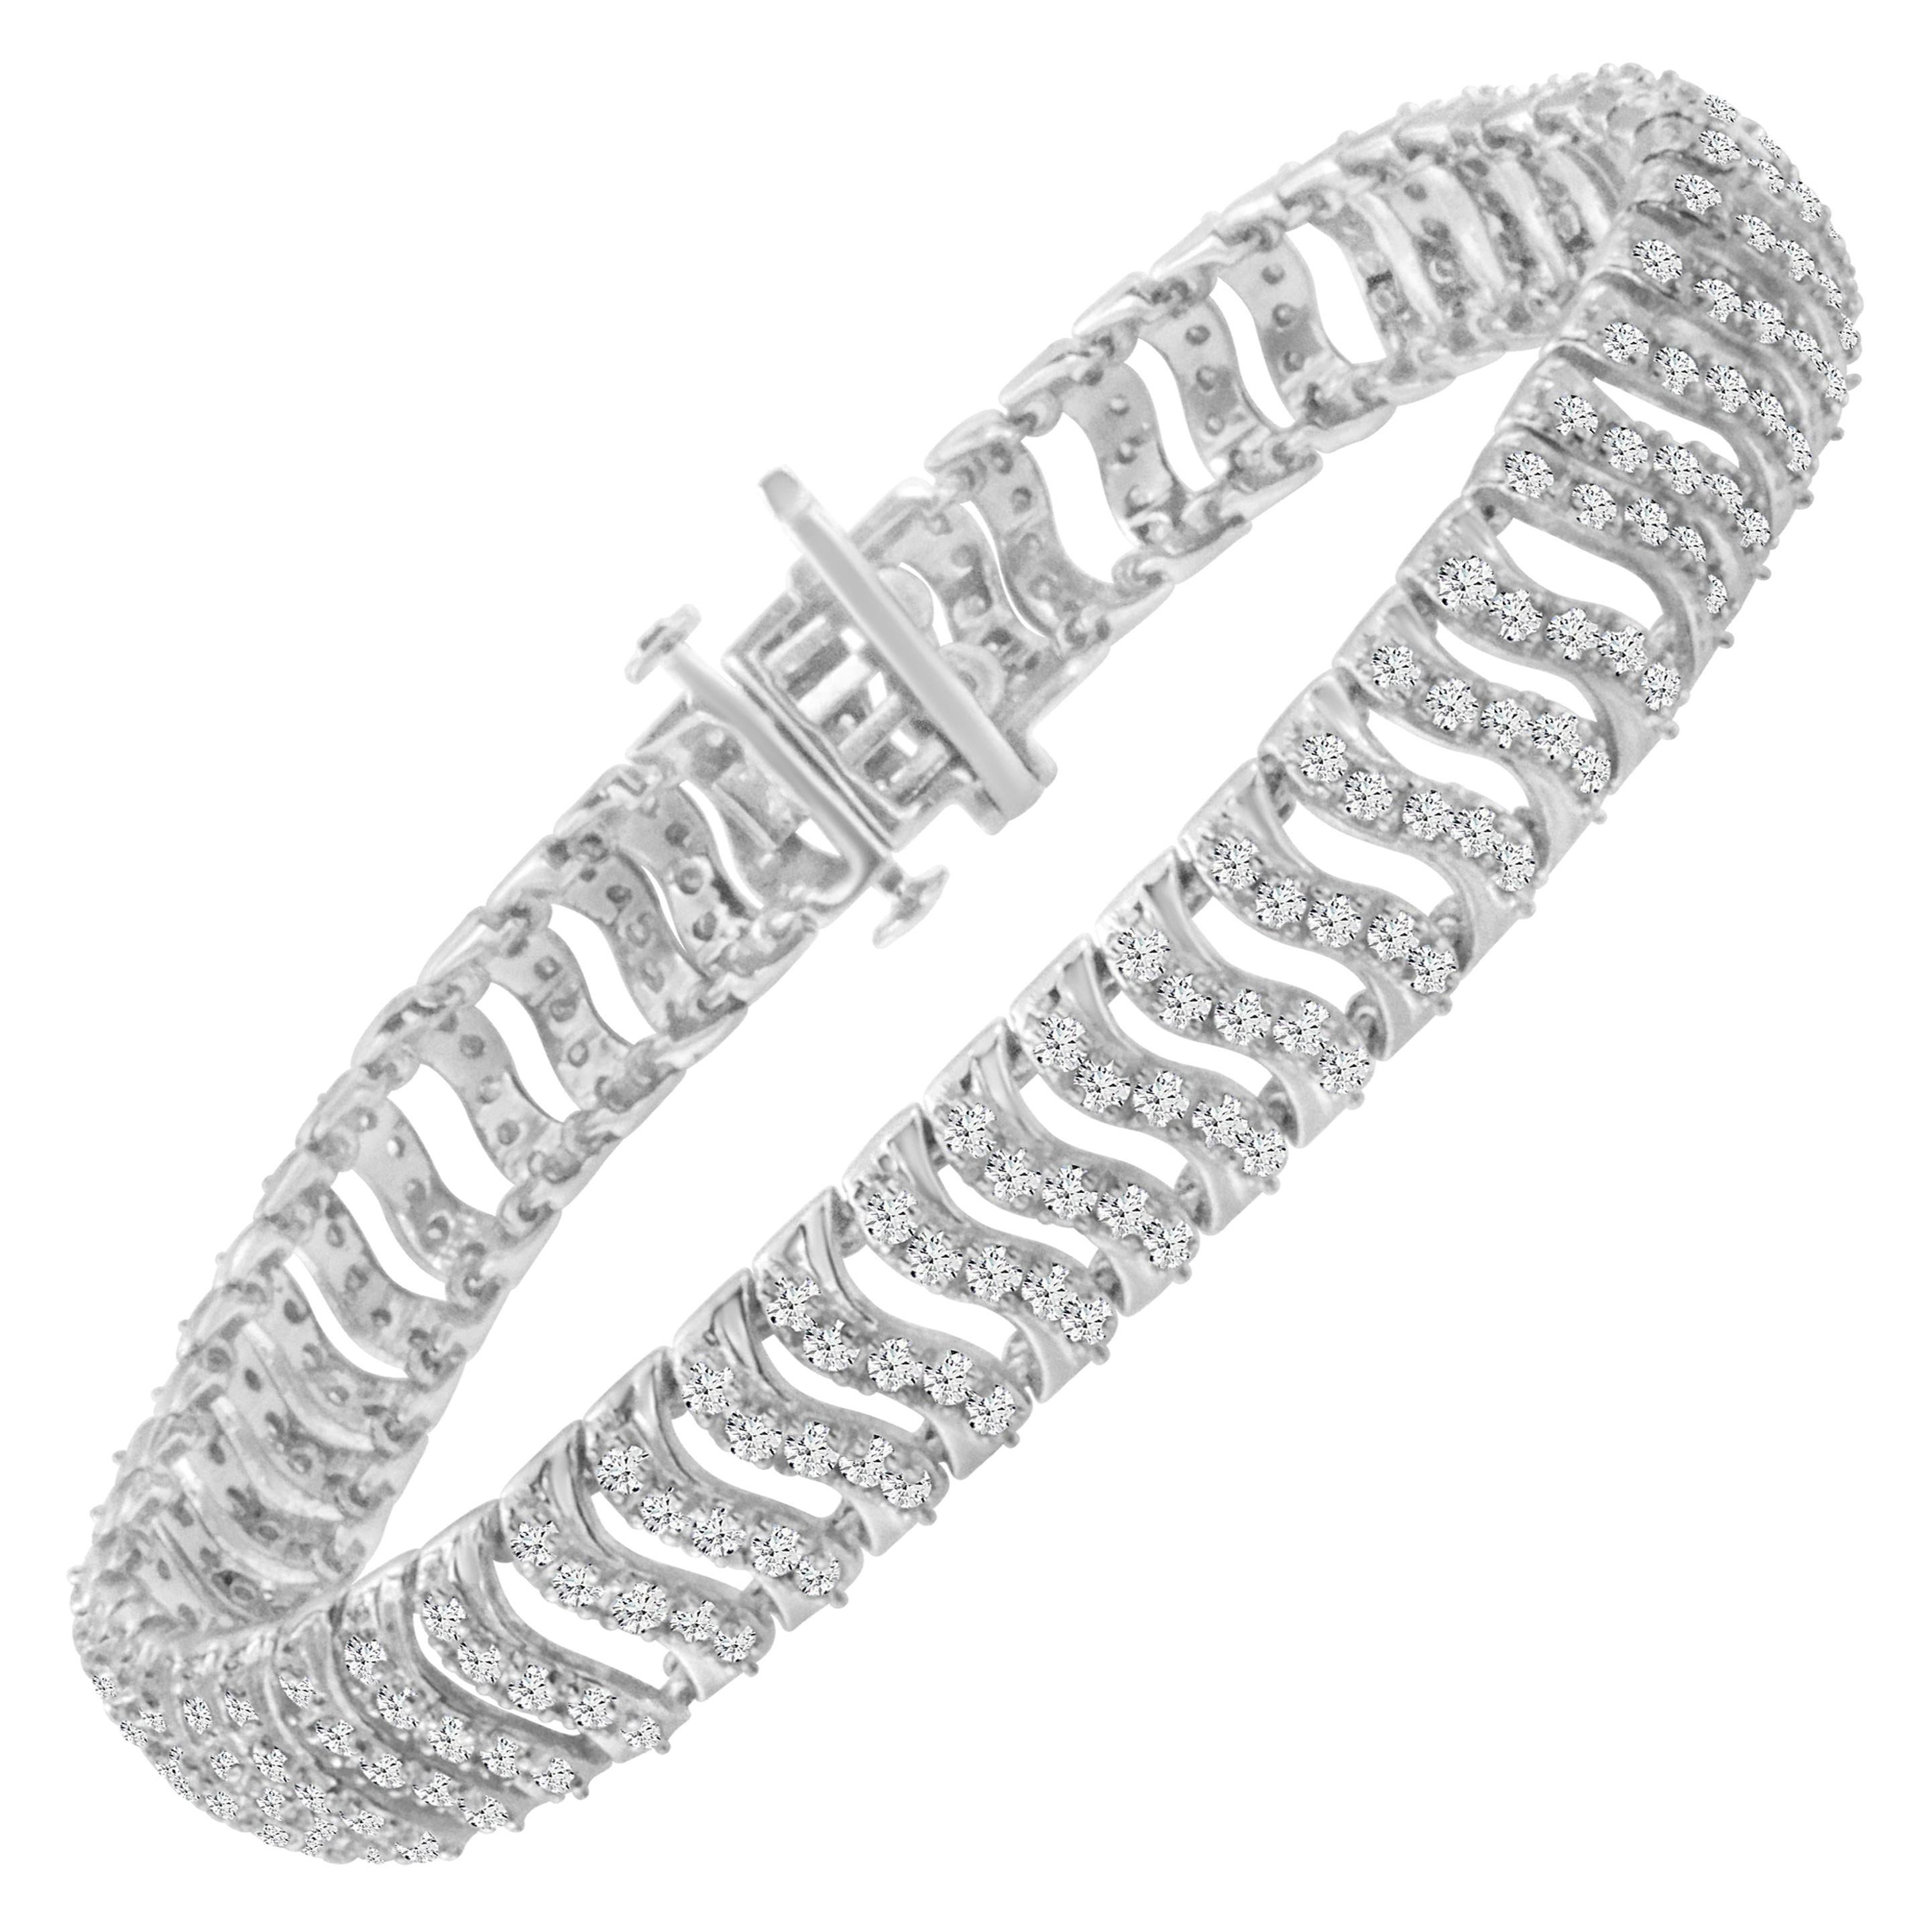 .925 Sterling Silver 3.0 Cttw Diamond Chevron "S" Wave Link Bracelet